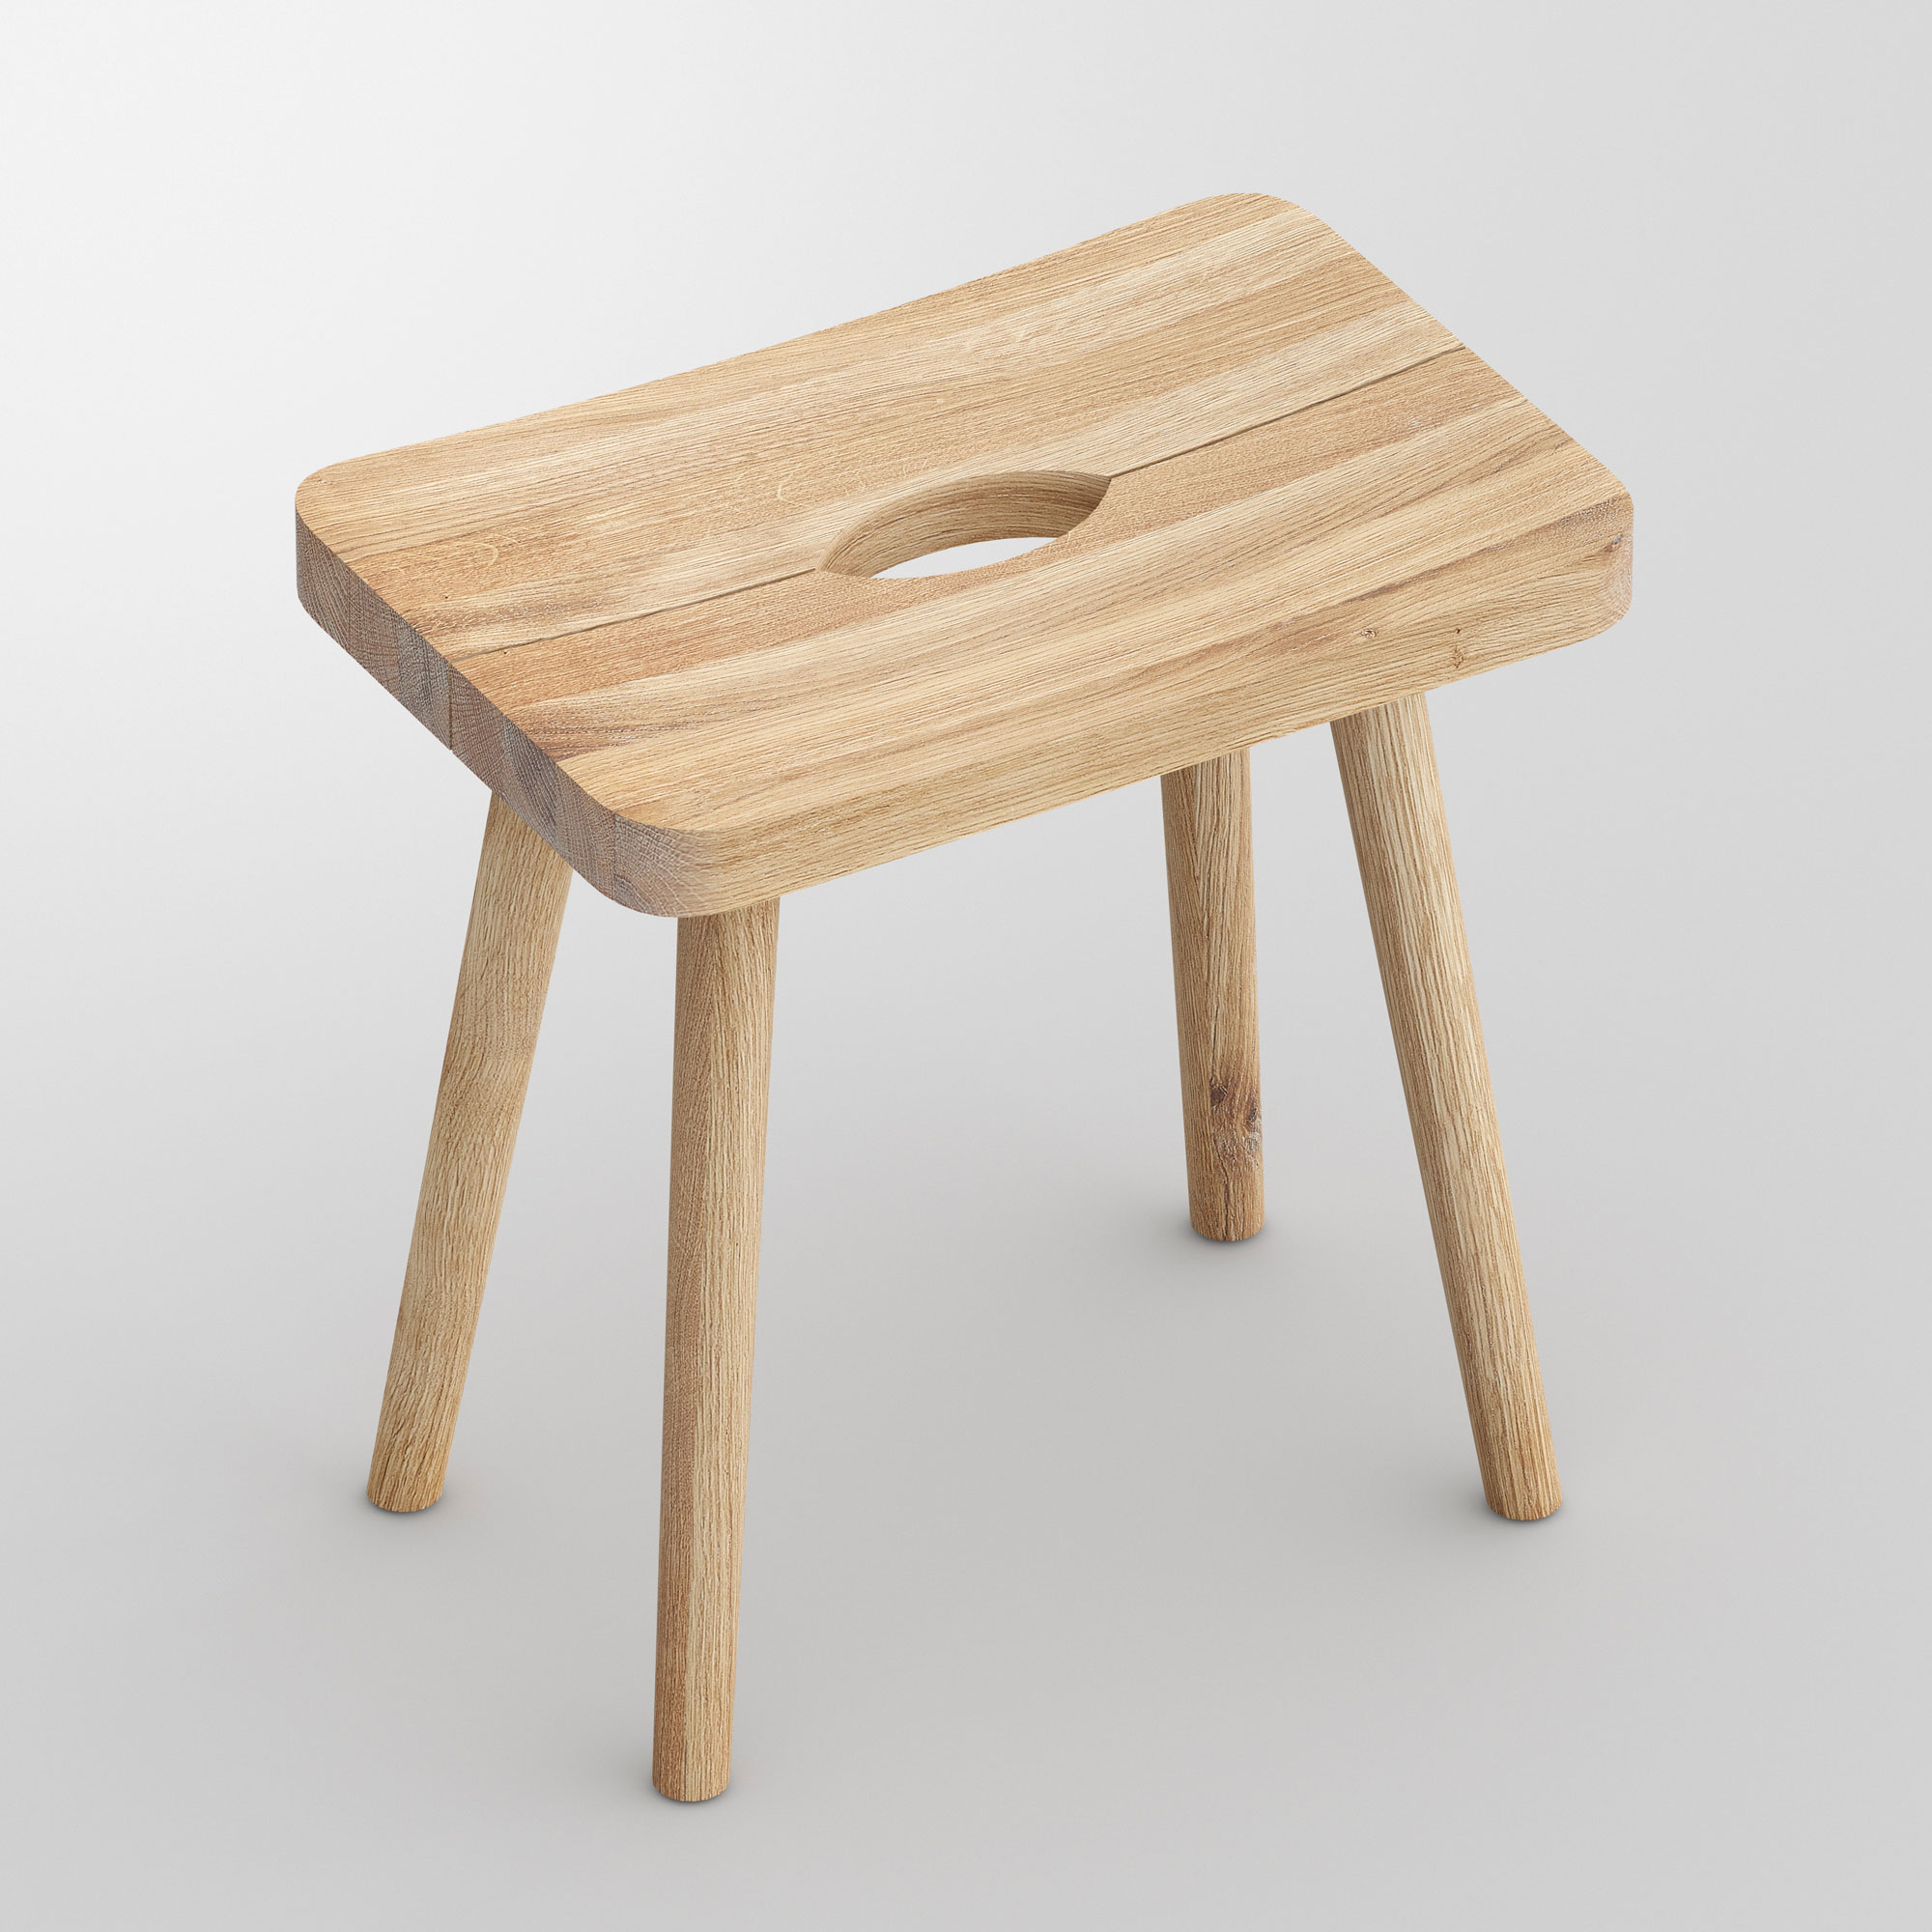 Wood Stool UNA cam1 custom made in solid wood by vitamin design